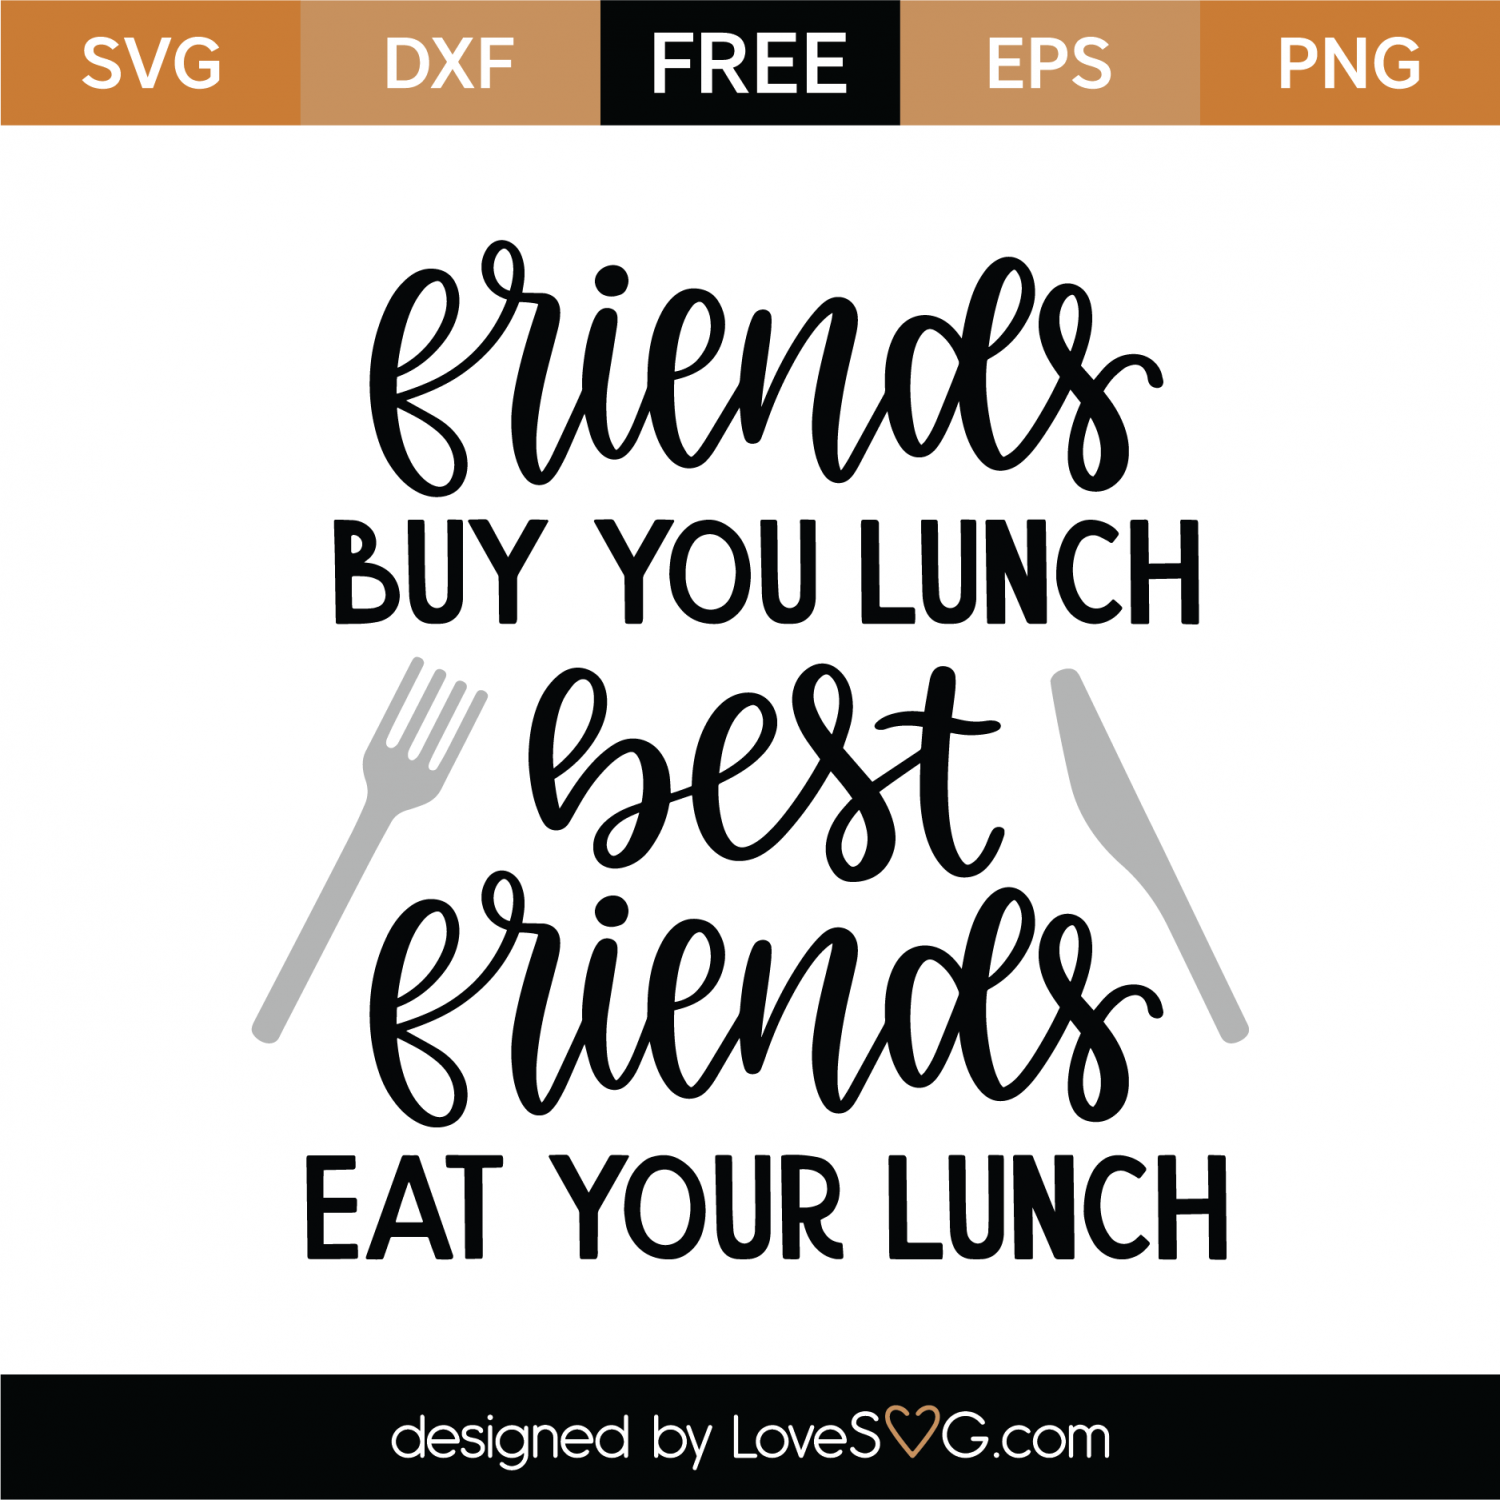 Download Free Best Friends Eat Your Lunch SVG Cut File | Lovesvg.com